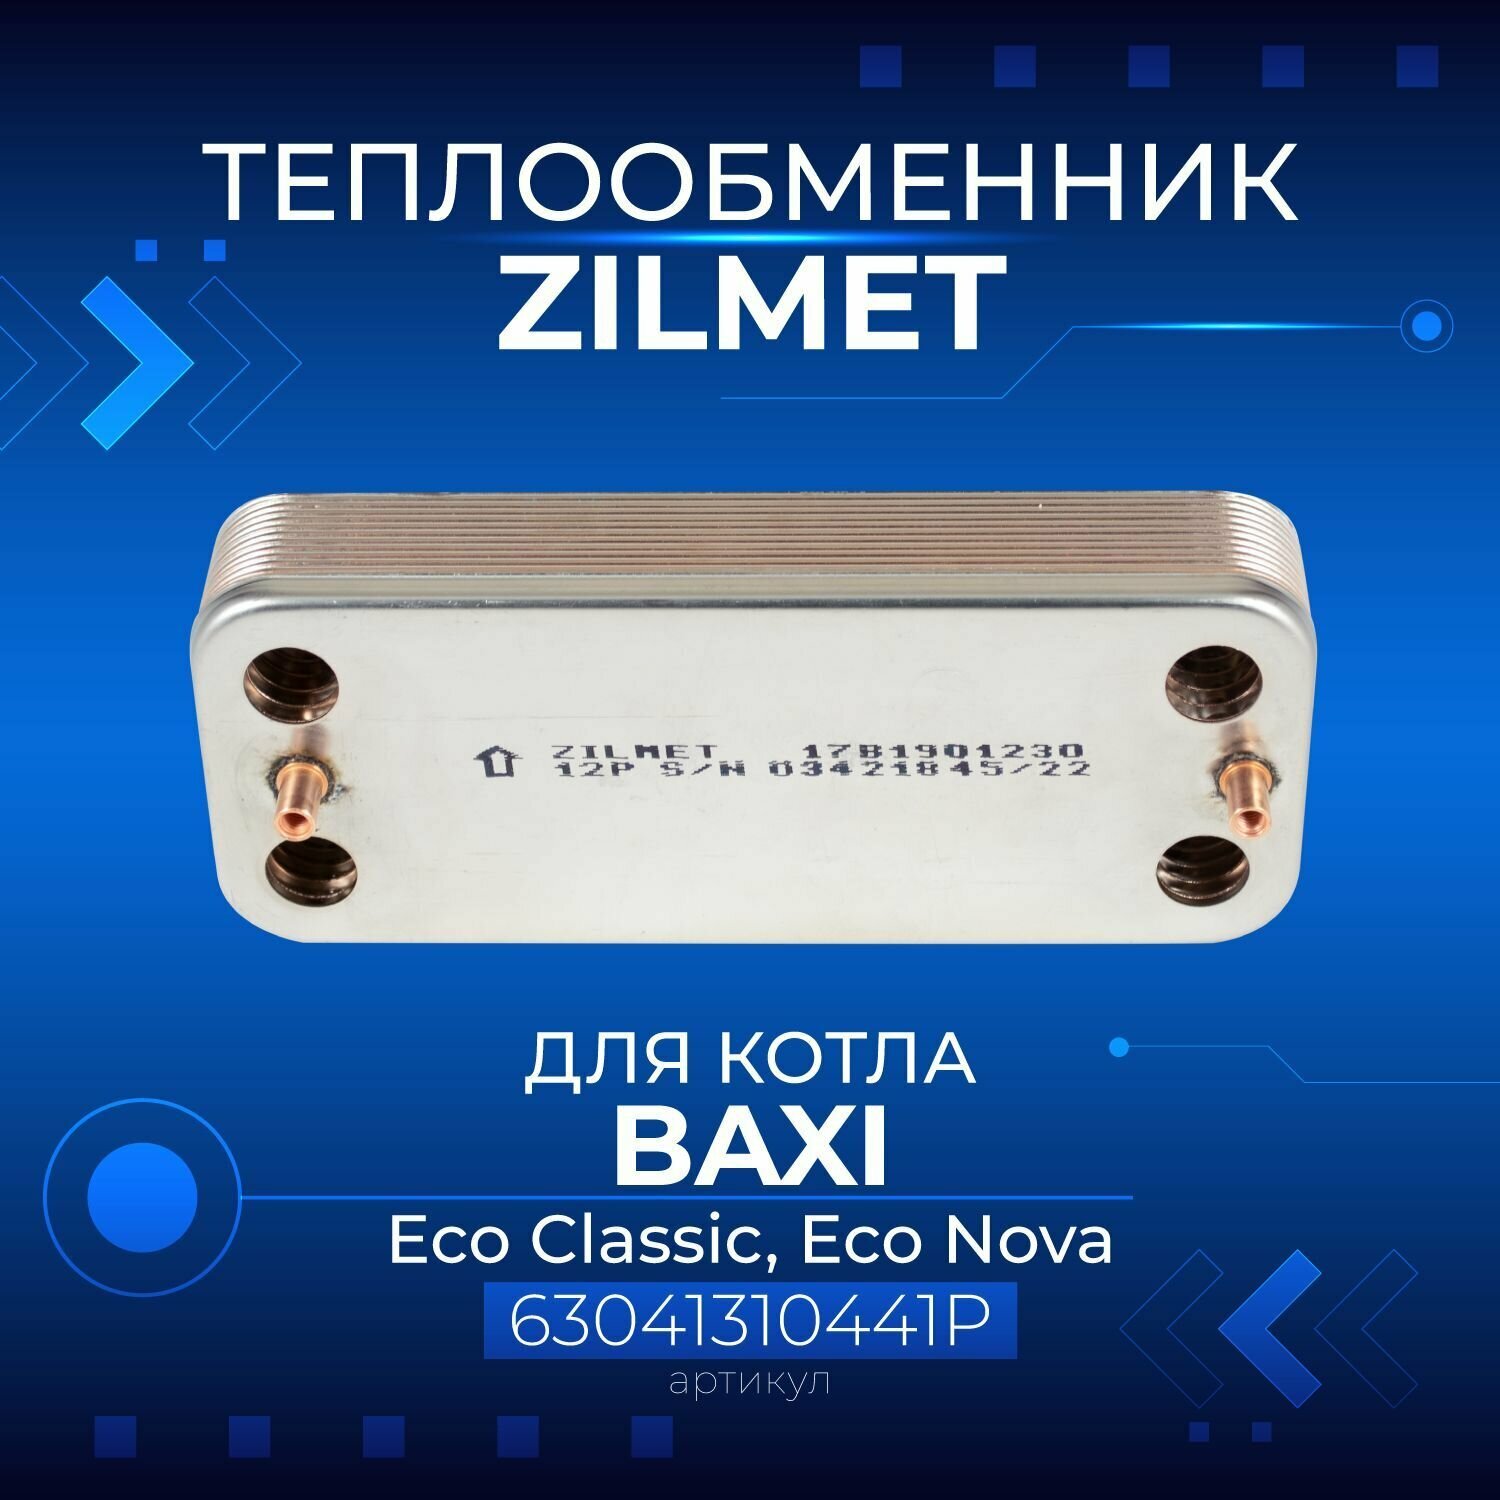 Zilmet (Италия, 12 пластин) BAXI Eco Classic, Eco Nova, 63041310441P, Теплообменник - фотография № 1